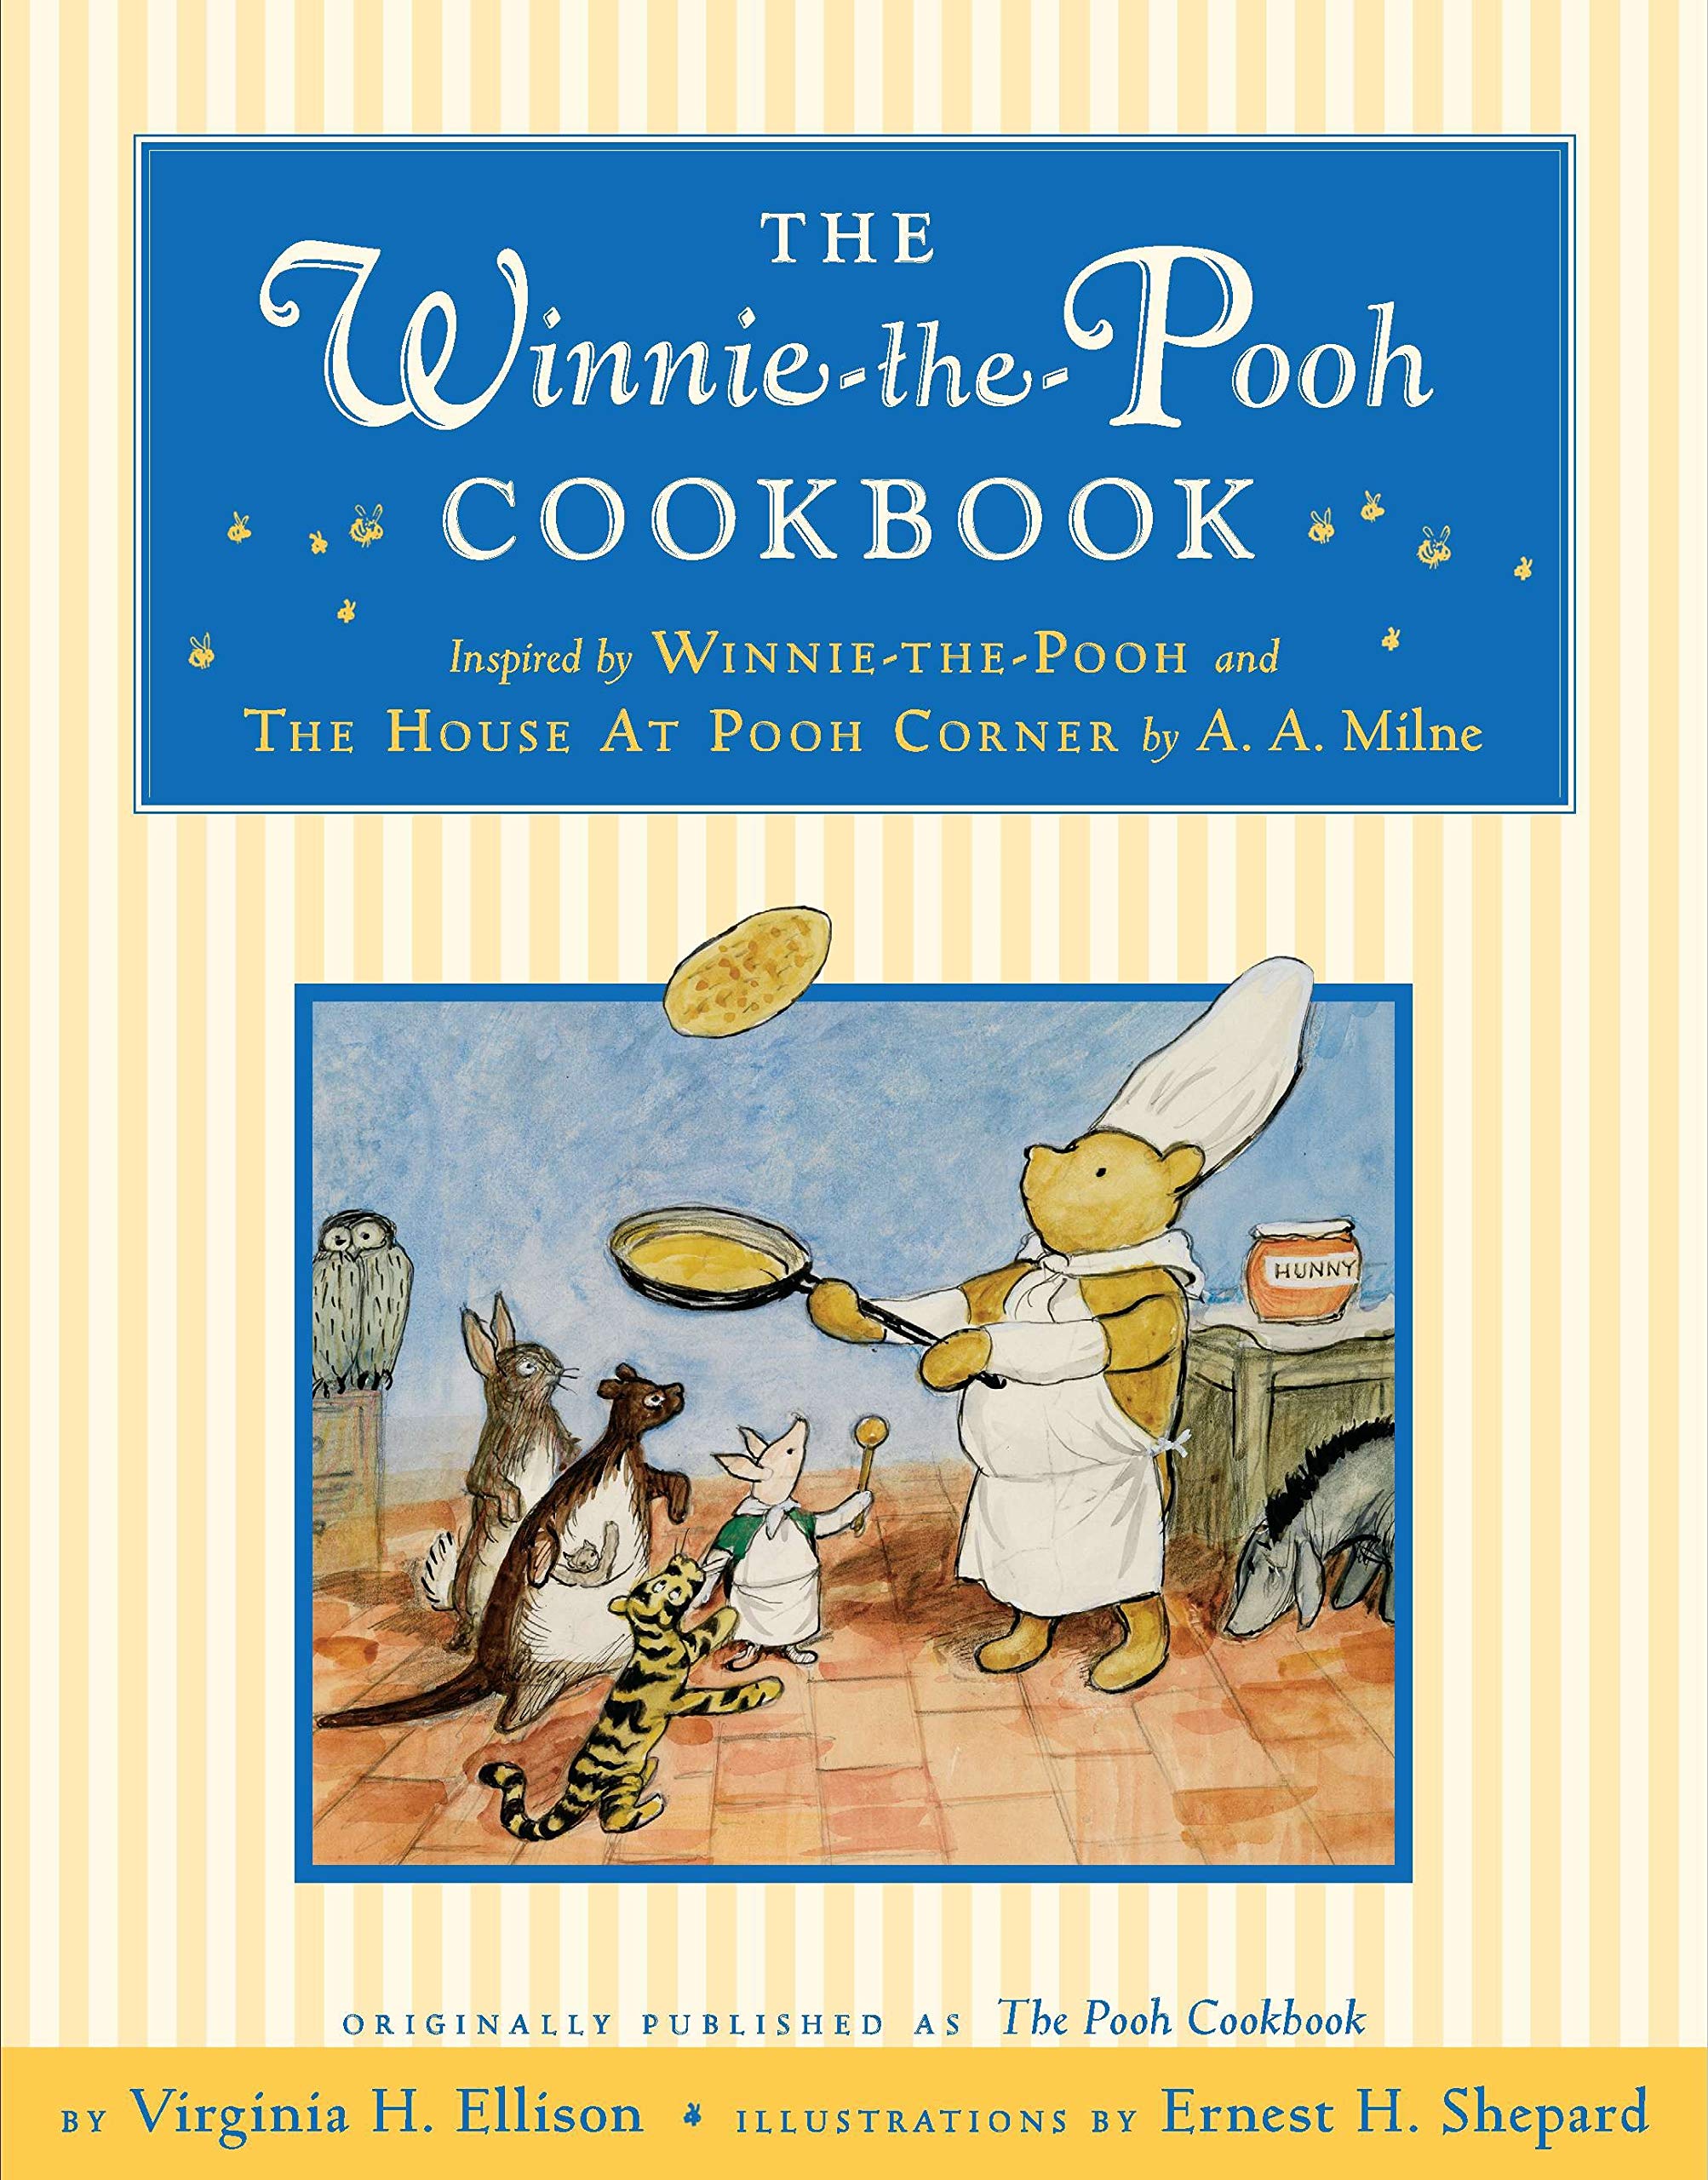 The Winnie-the-Pooh Cookbook by Virginia H. Ellison